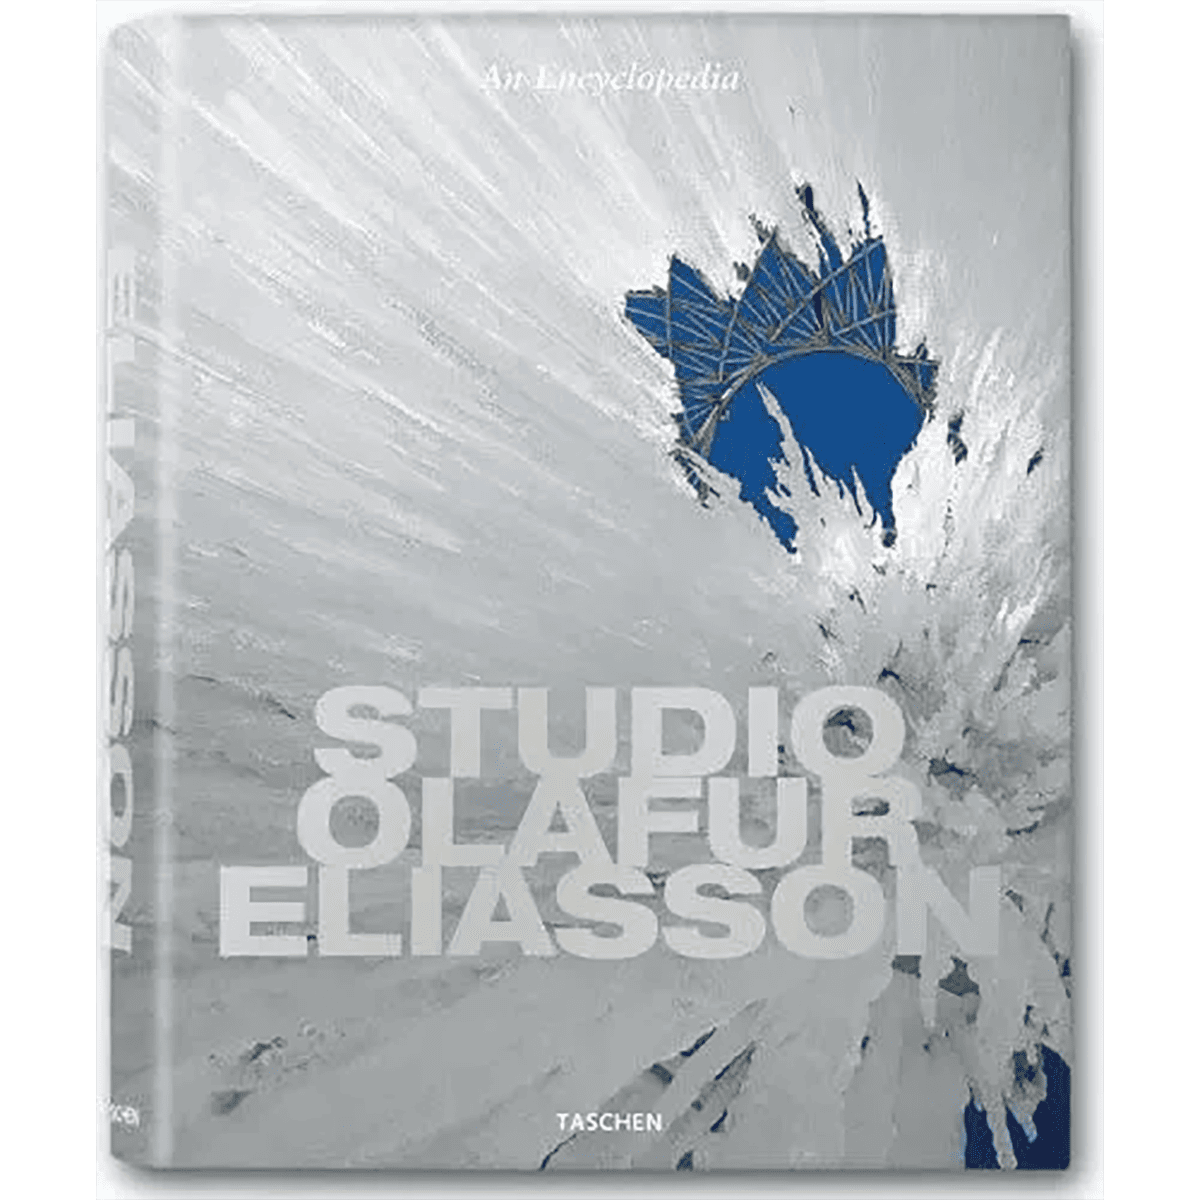 livro Studio Olafur Eliasson 1200px fr01 1 1 deezign